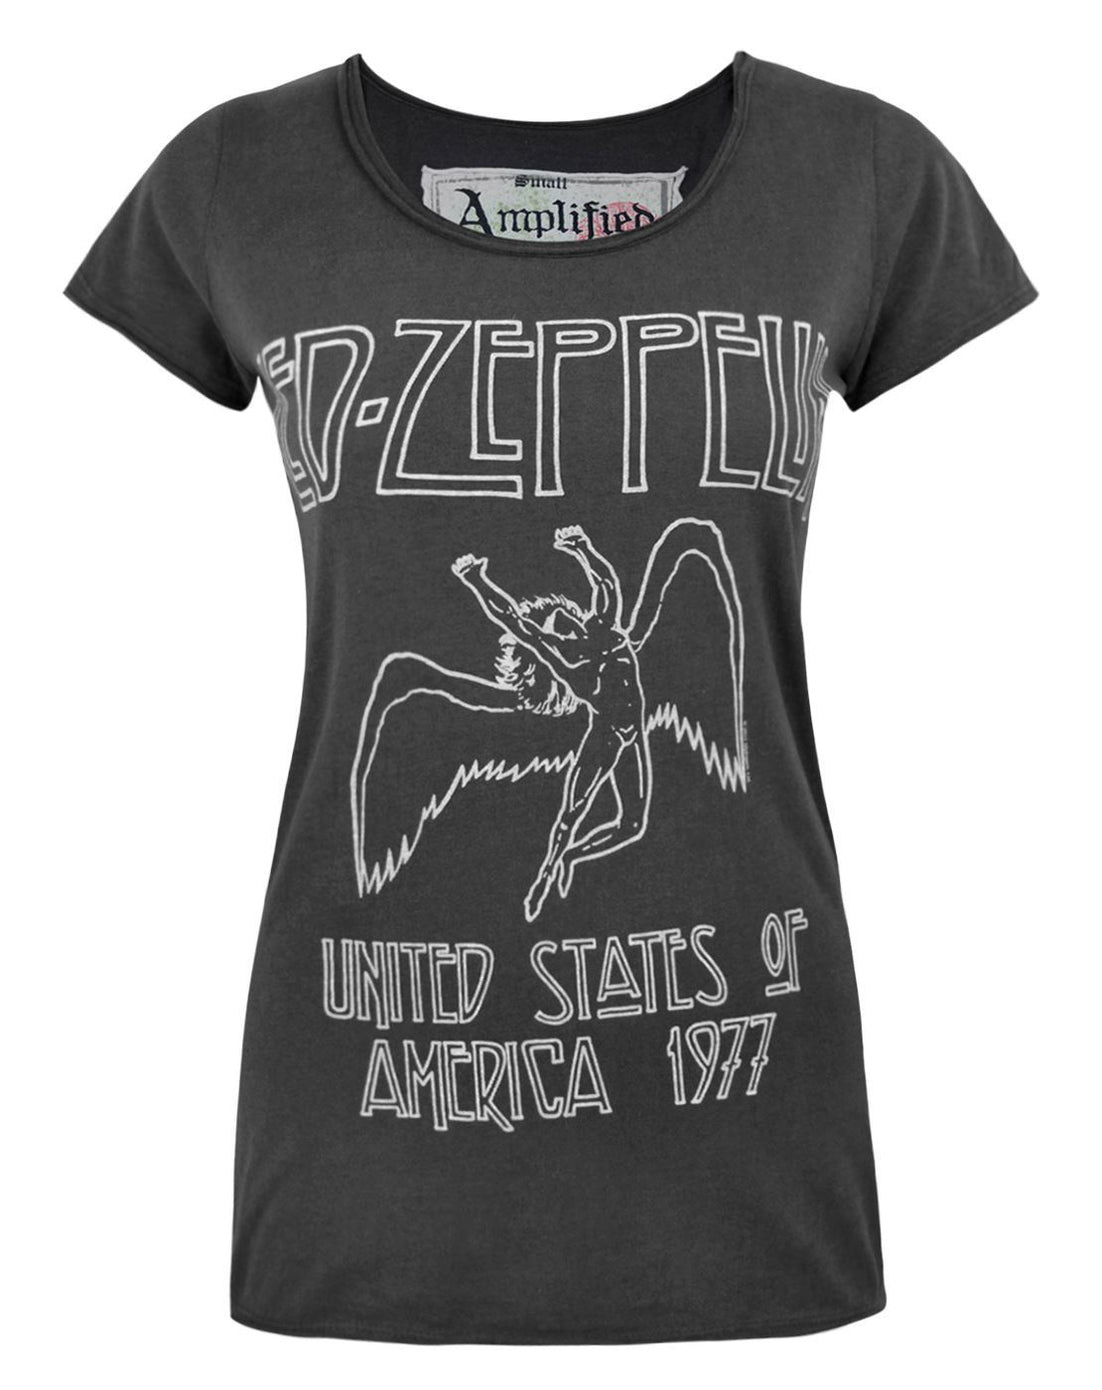 Amplified Led Zeppelin USA '77 Women's T-Shirt — Vanilla Underground